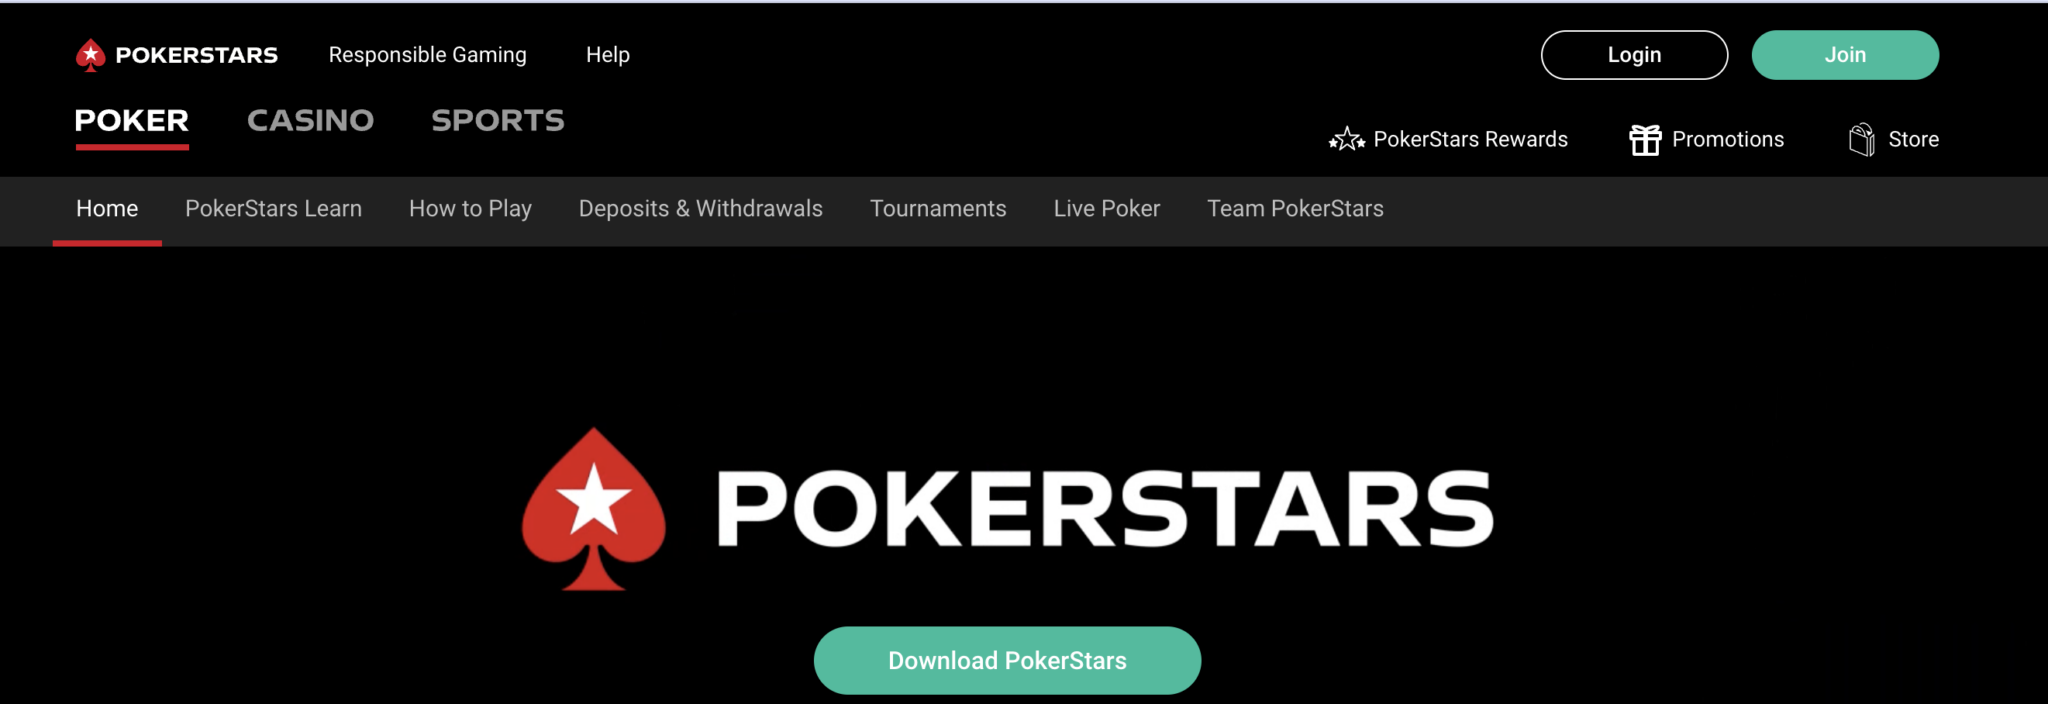 PokerStars Bonus, Promo Code, Sign Up Offer & Free Spins